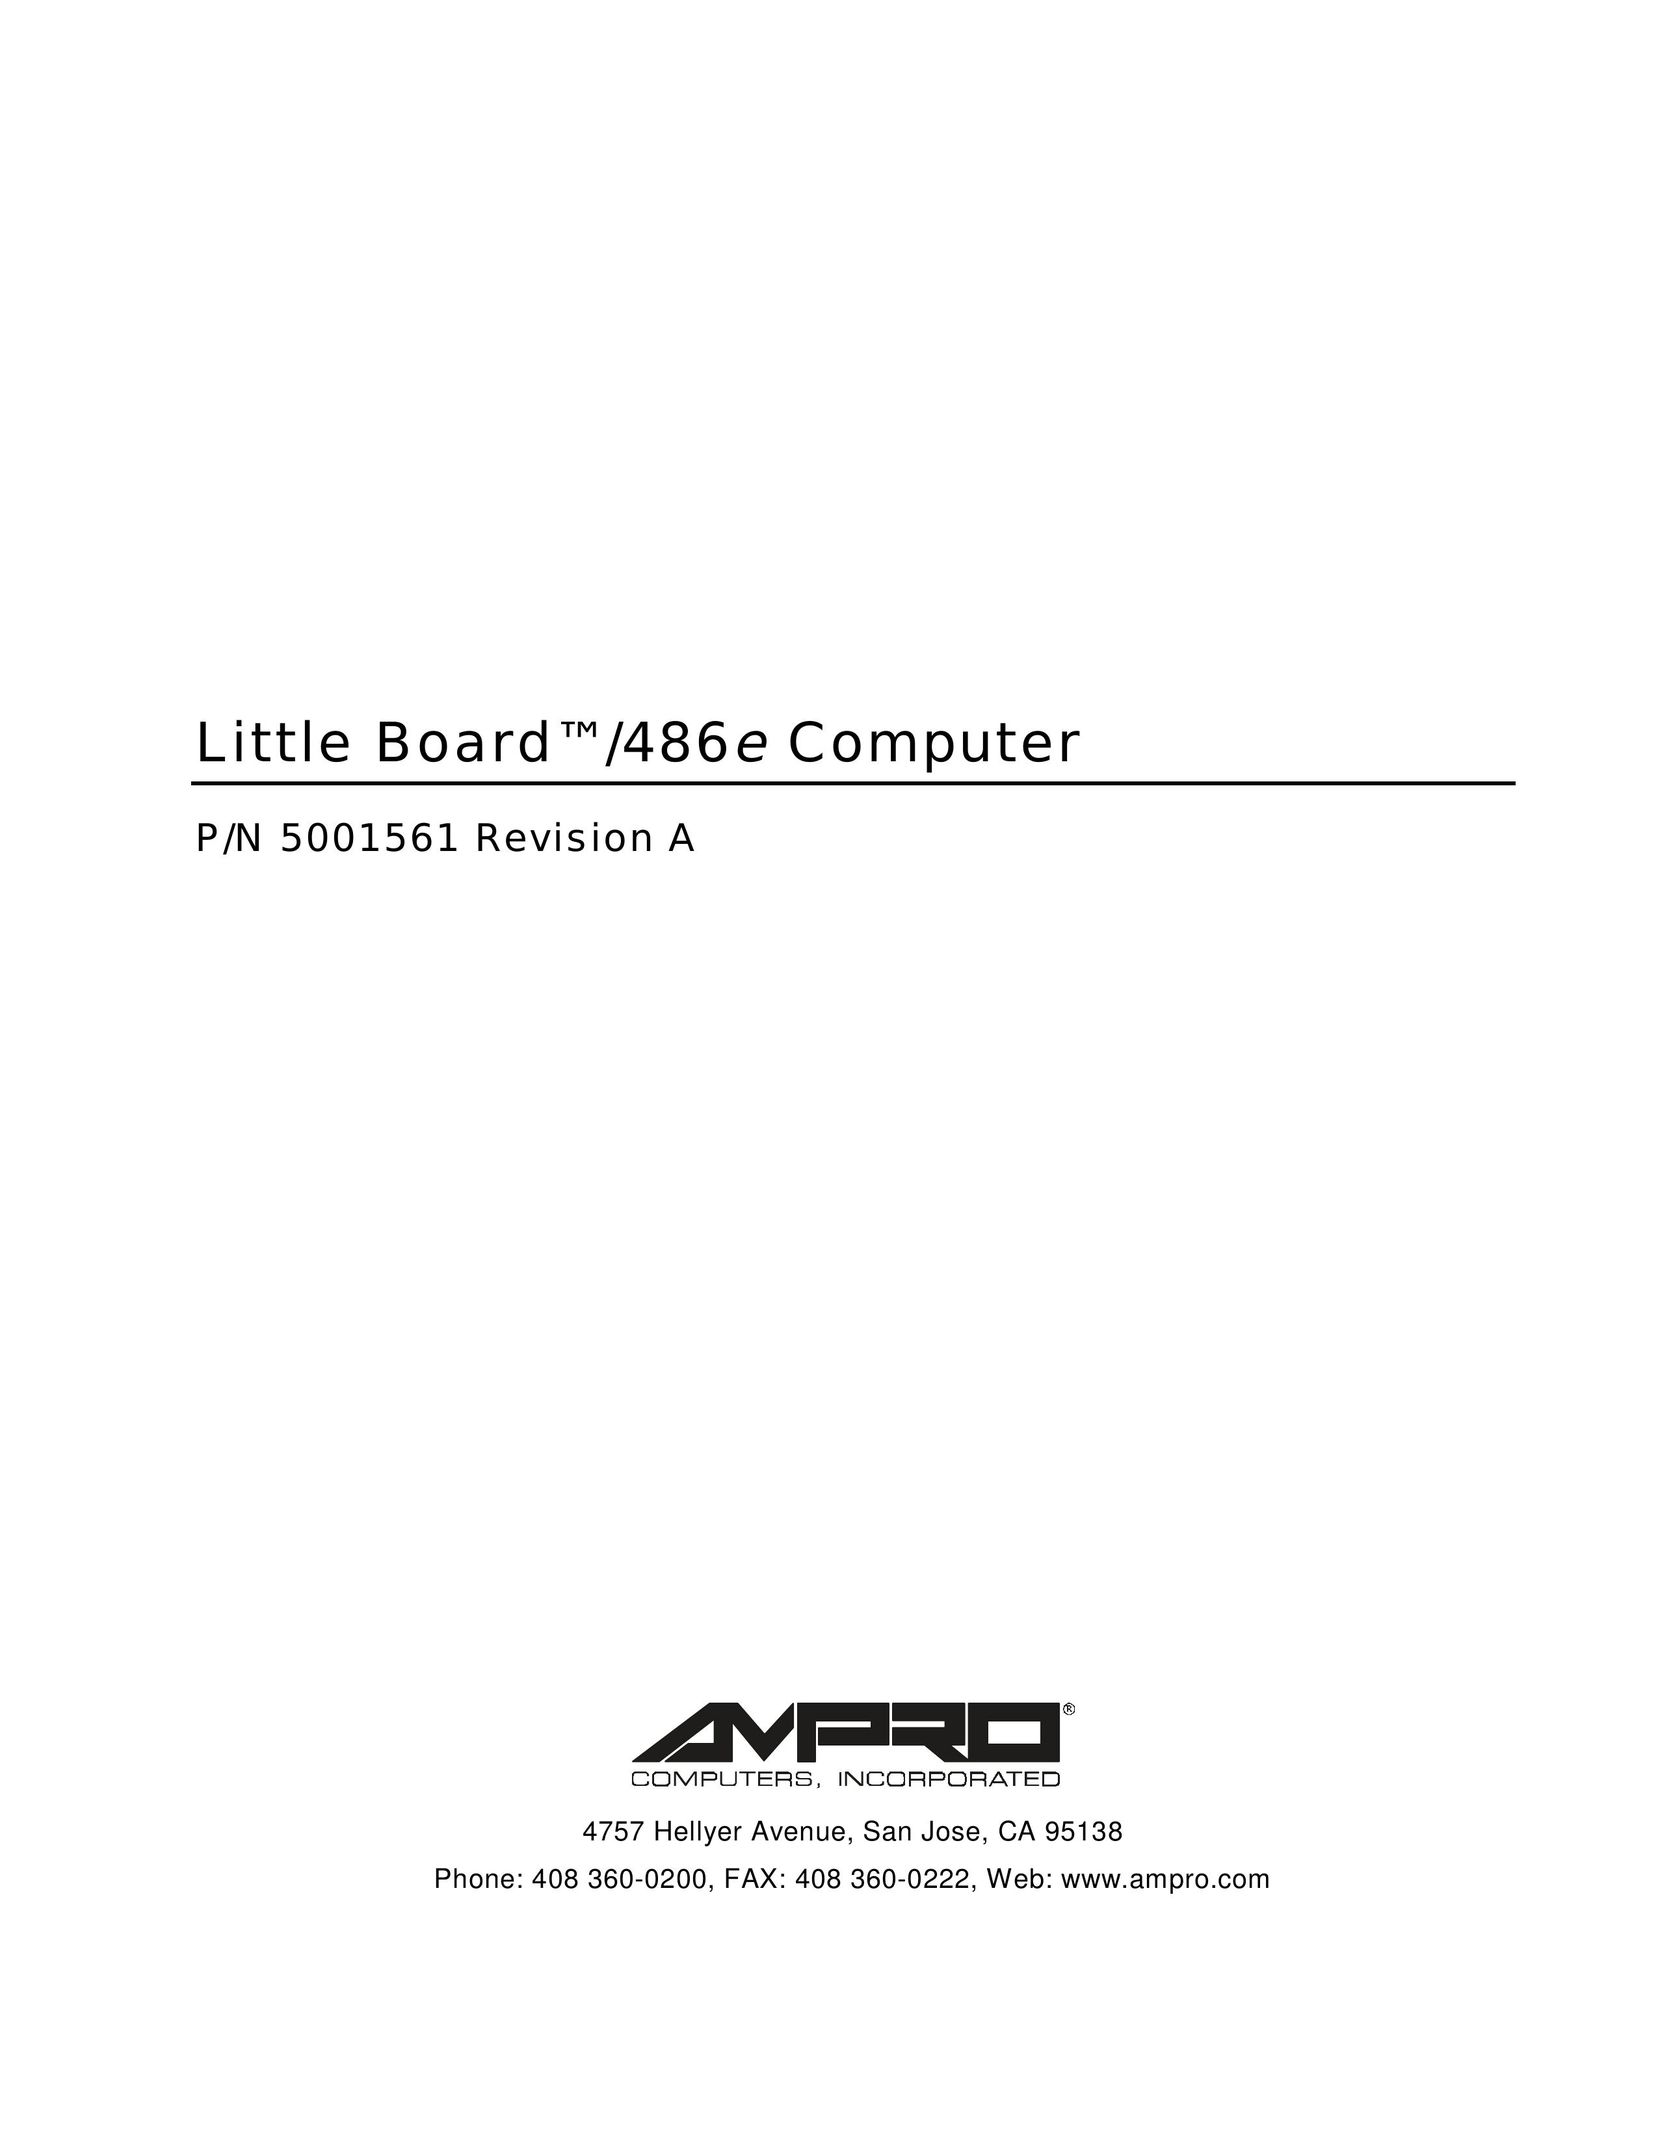 Ampro Corporation 486E Computer Hardware User Manual